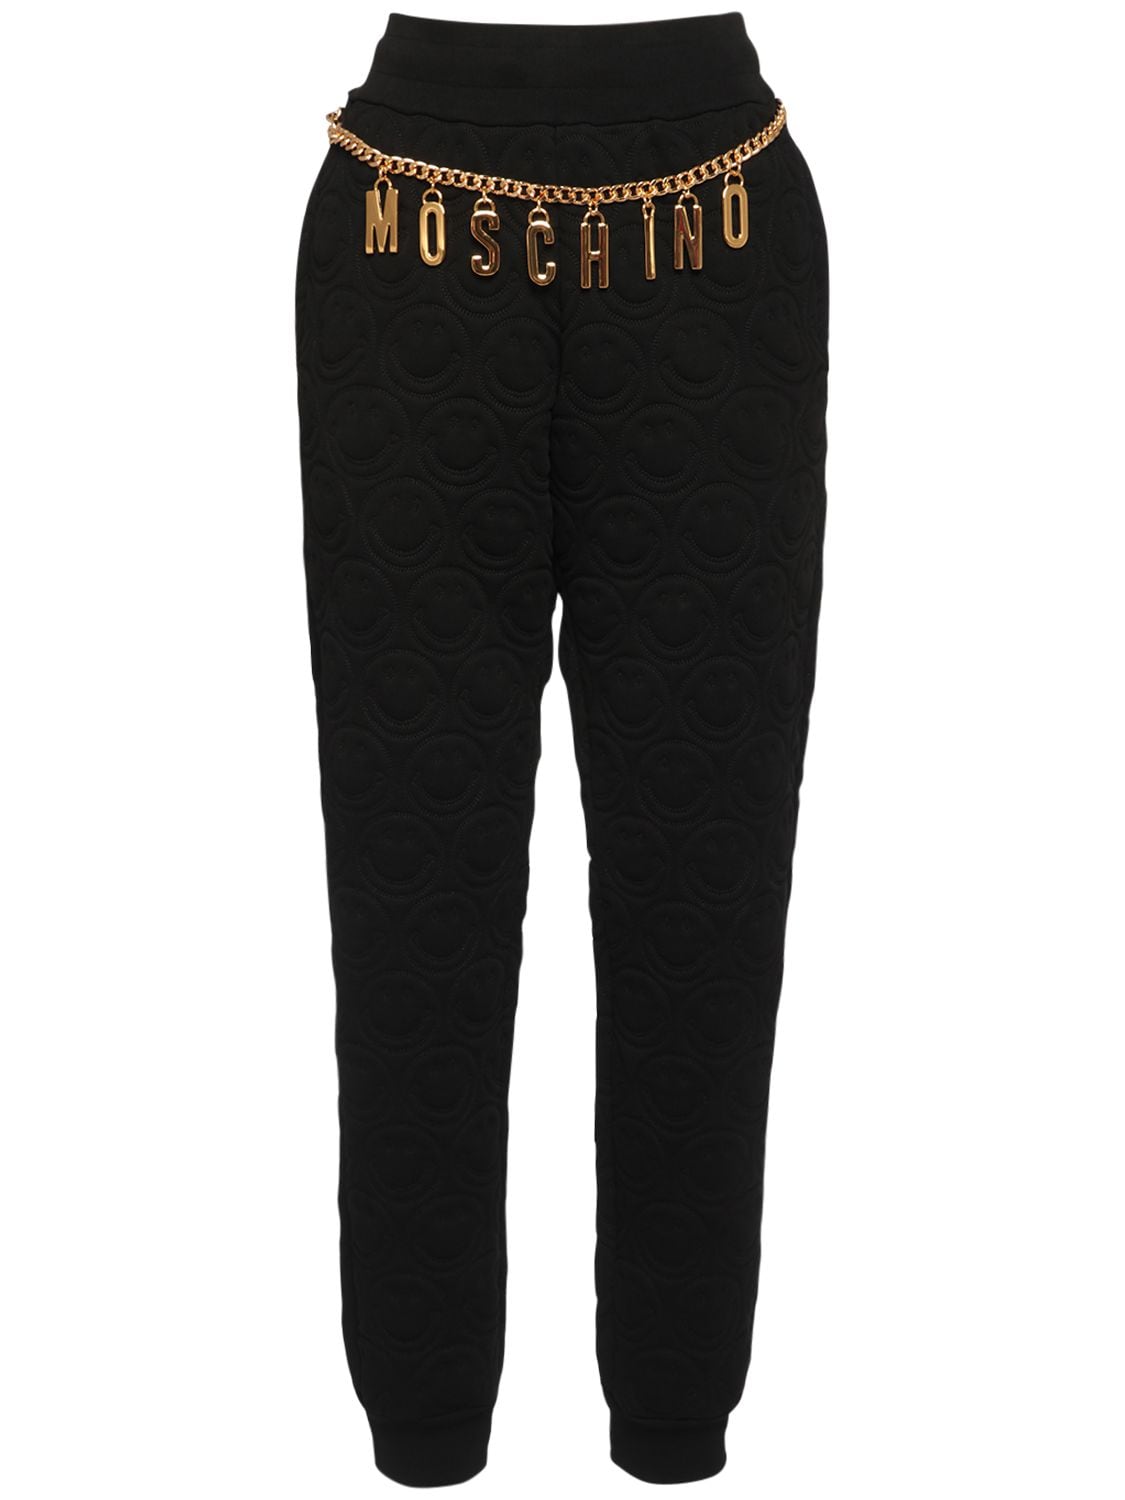 MOSCHINO LOGO链条棉质运动裤,73IL0O014-MDU1NQ2